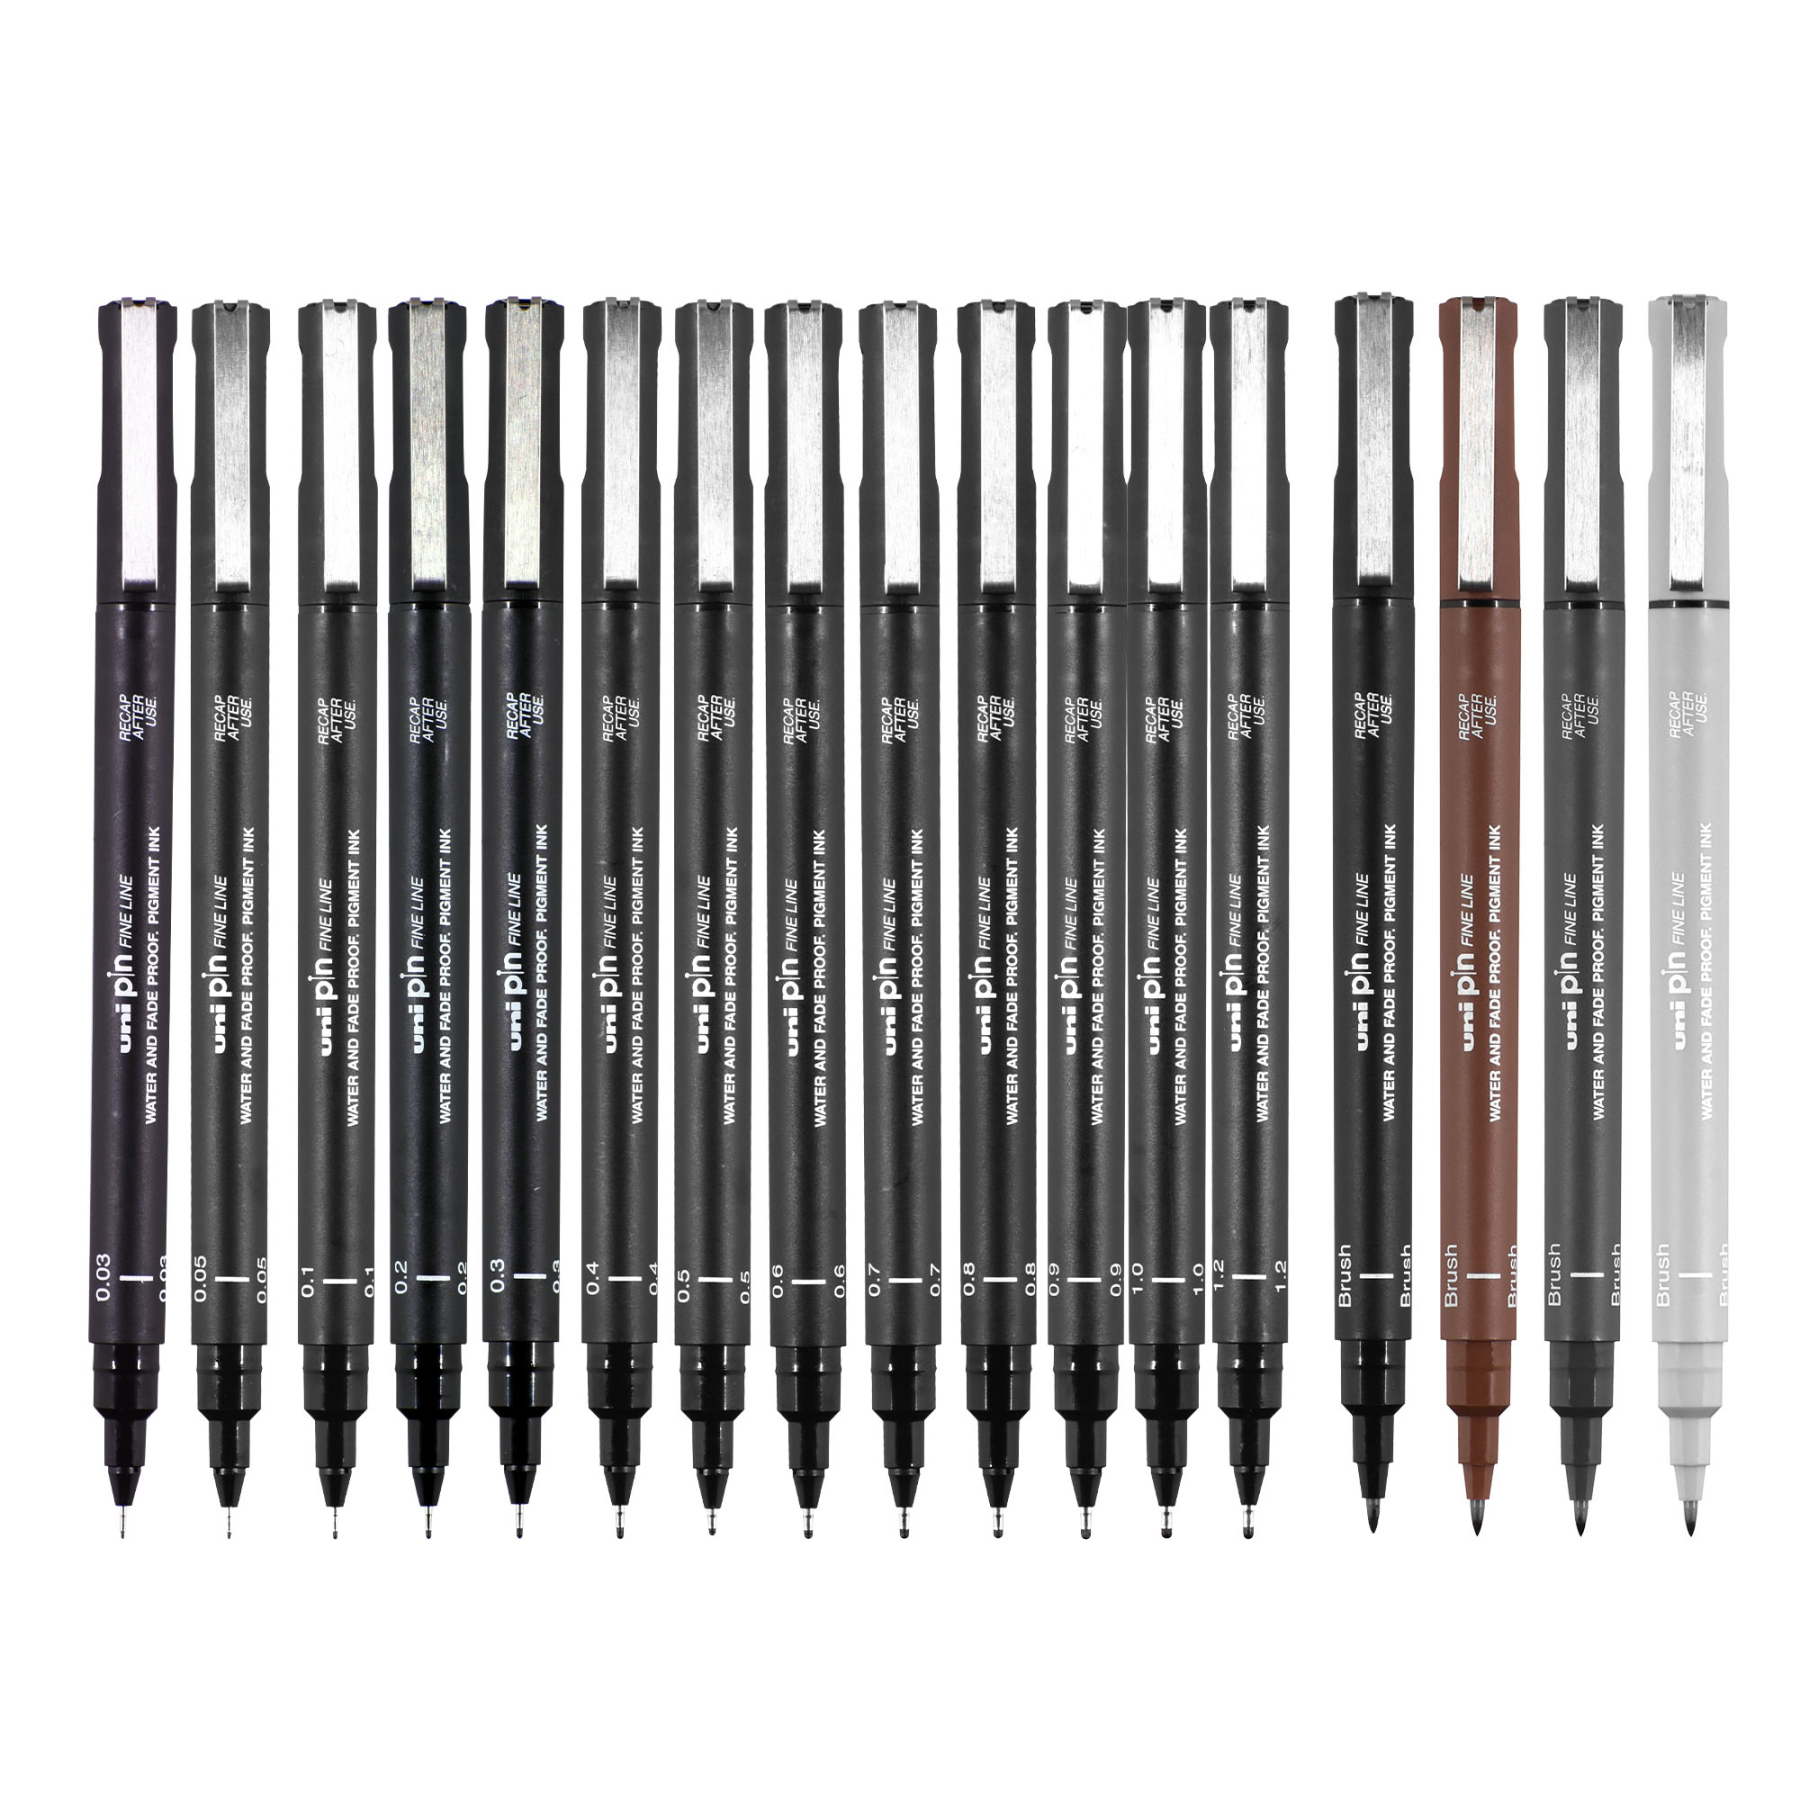 uni® Pin, Fineliner Drawing Pen (Brush Tip)